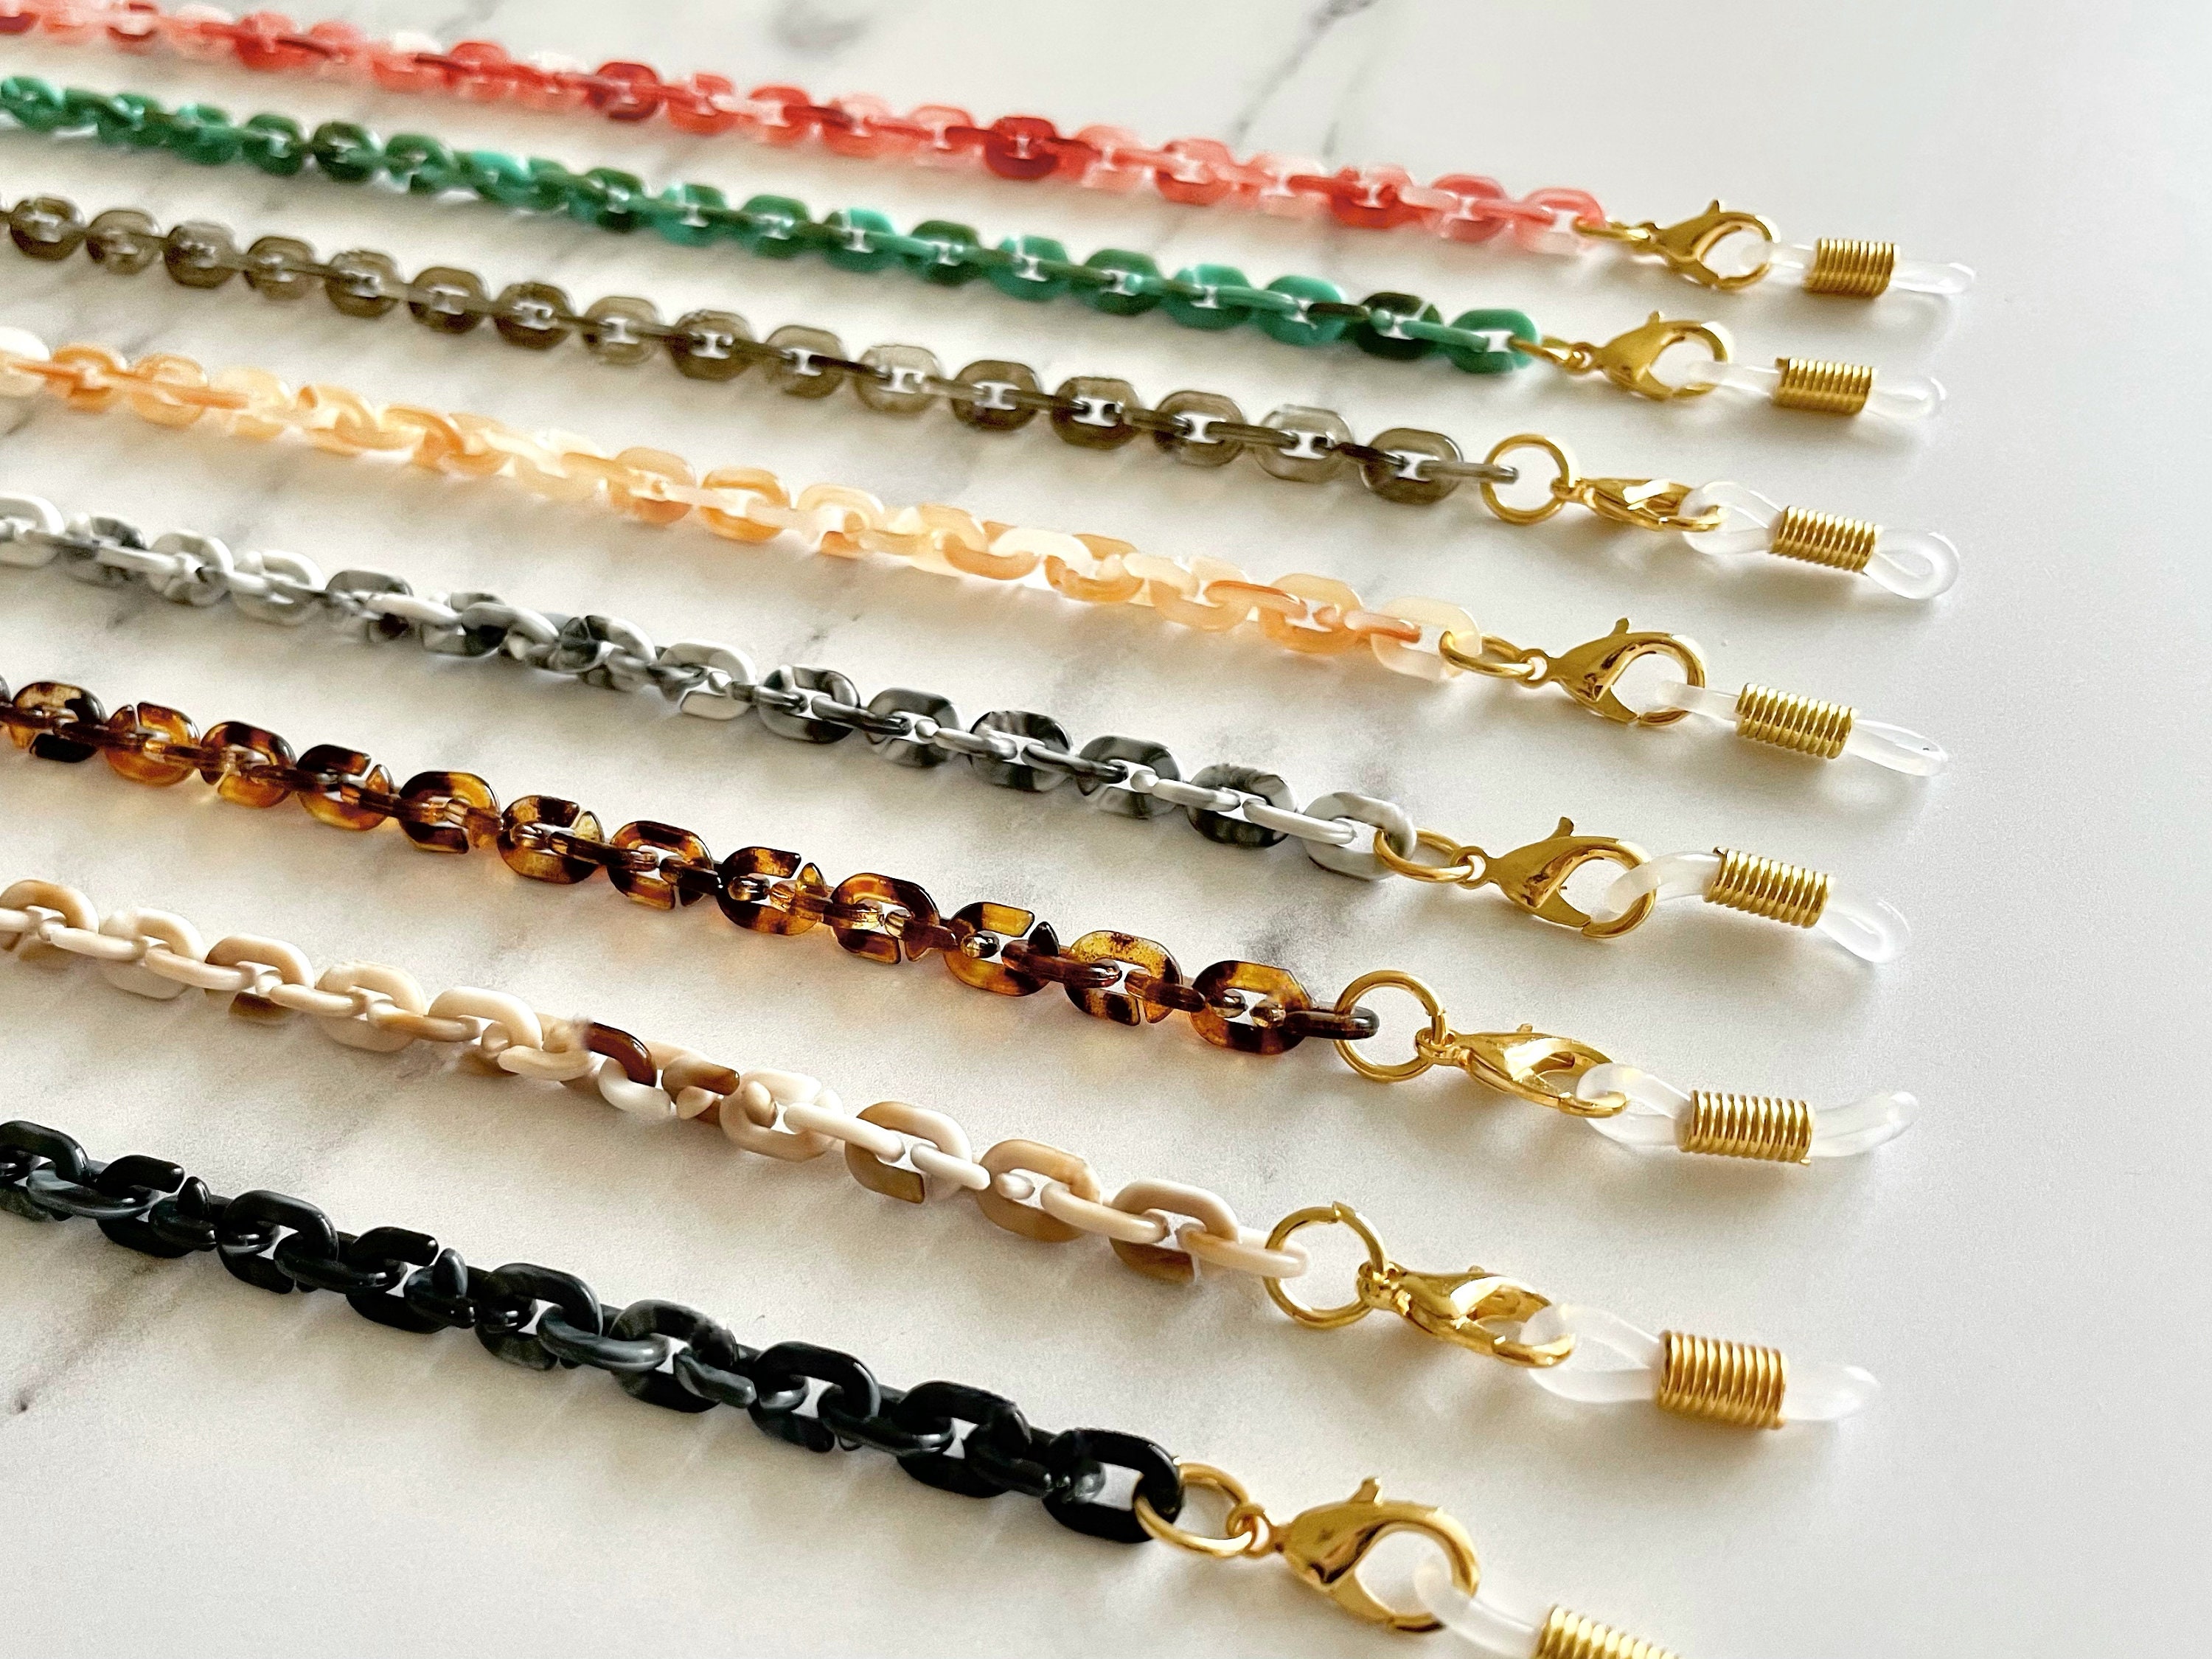 Wholesale 20 pcs Eyeglass Holders for Handcrafted Bracelets Necklaces